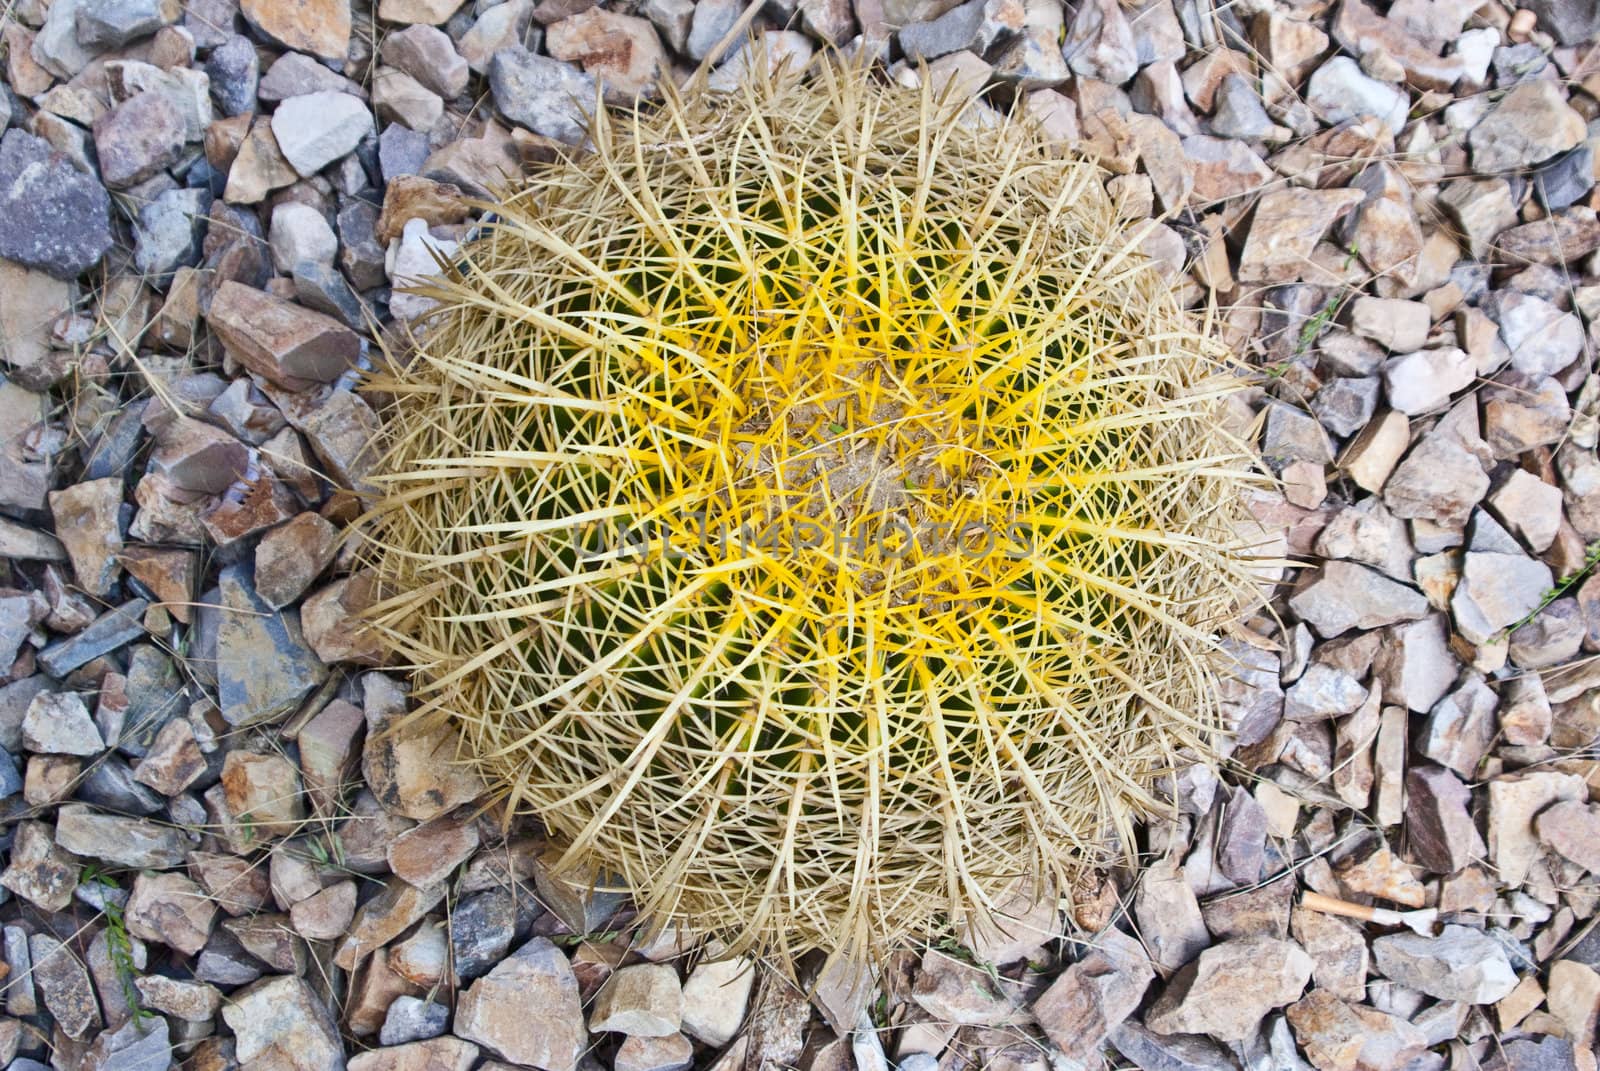 Dry Cactus by emattil